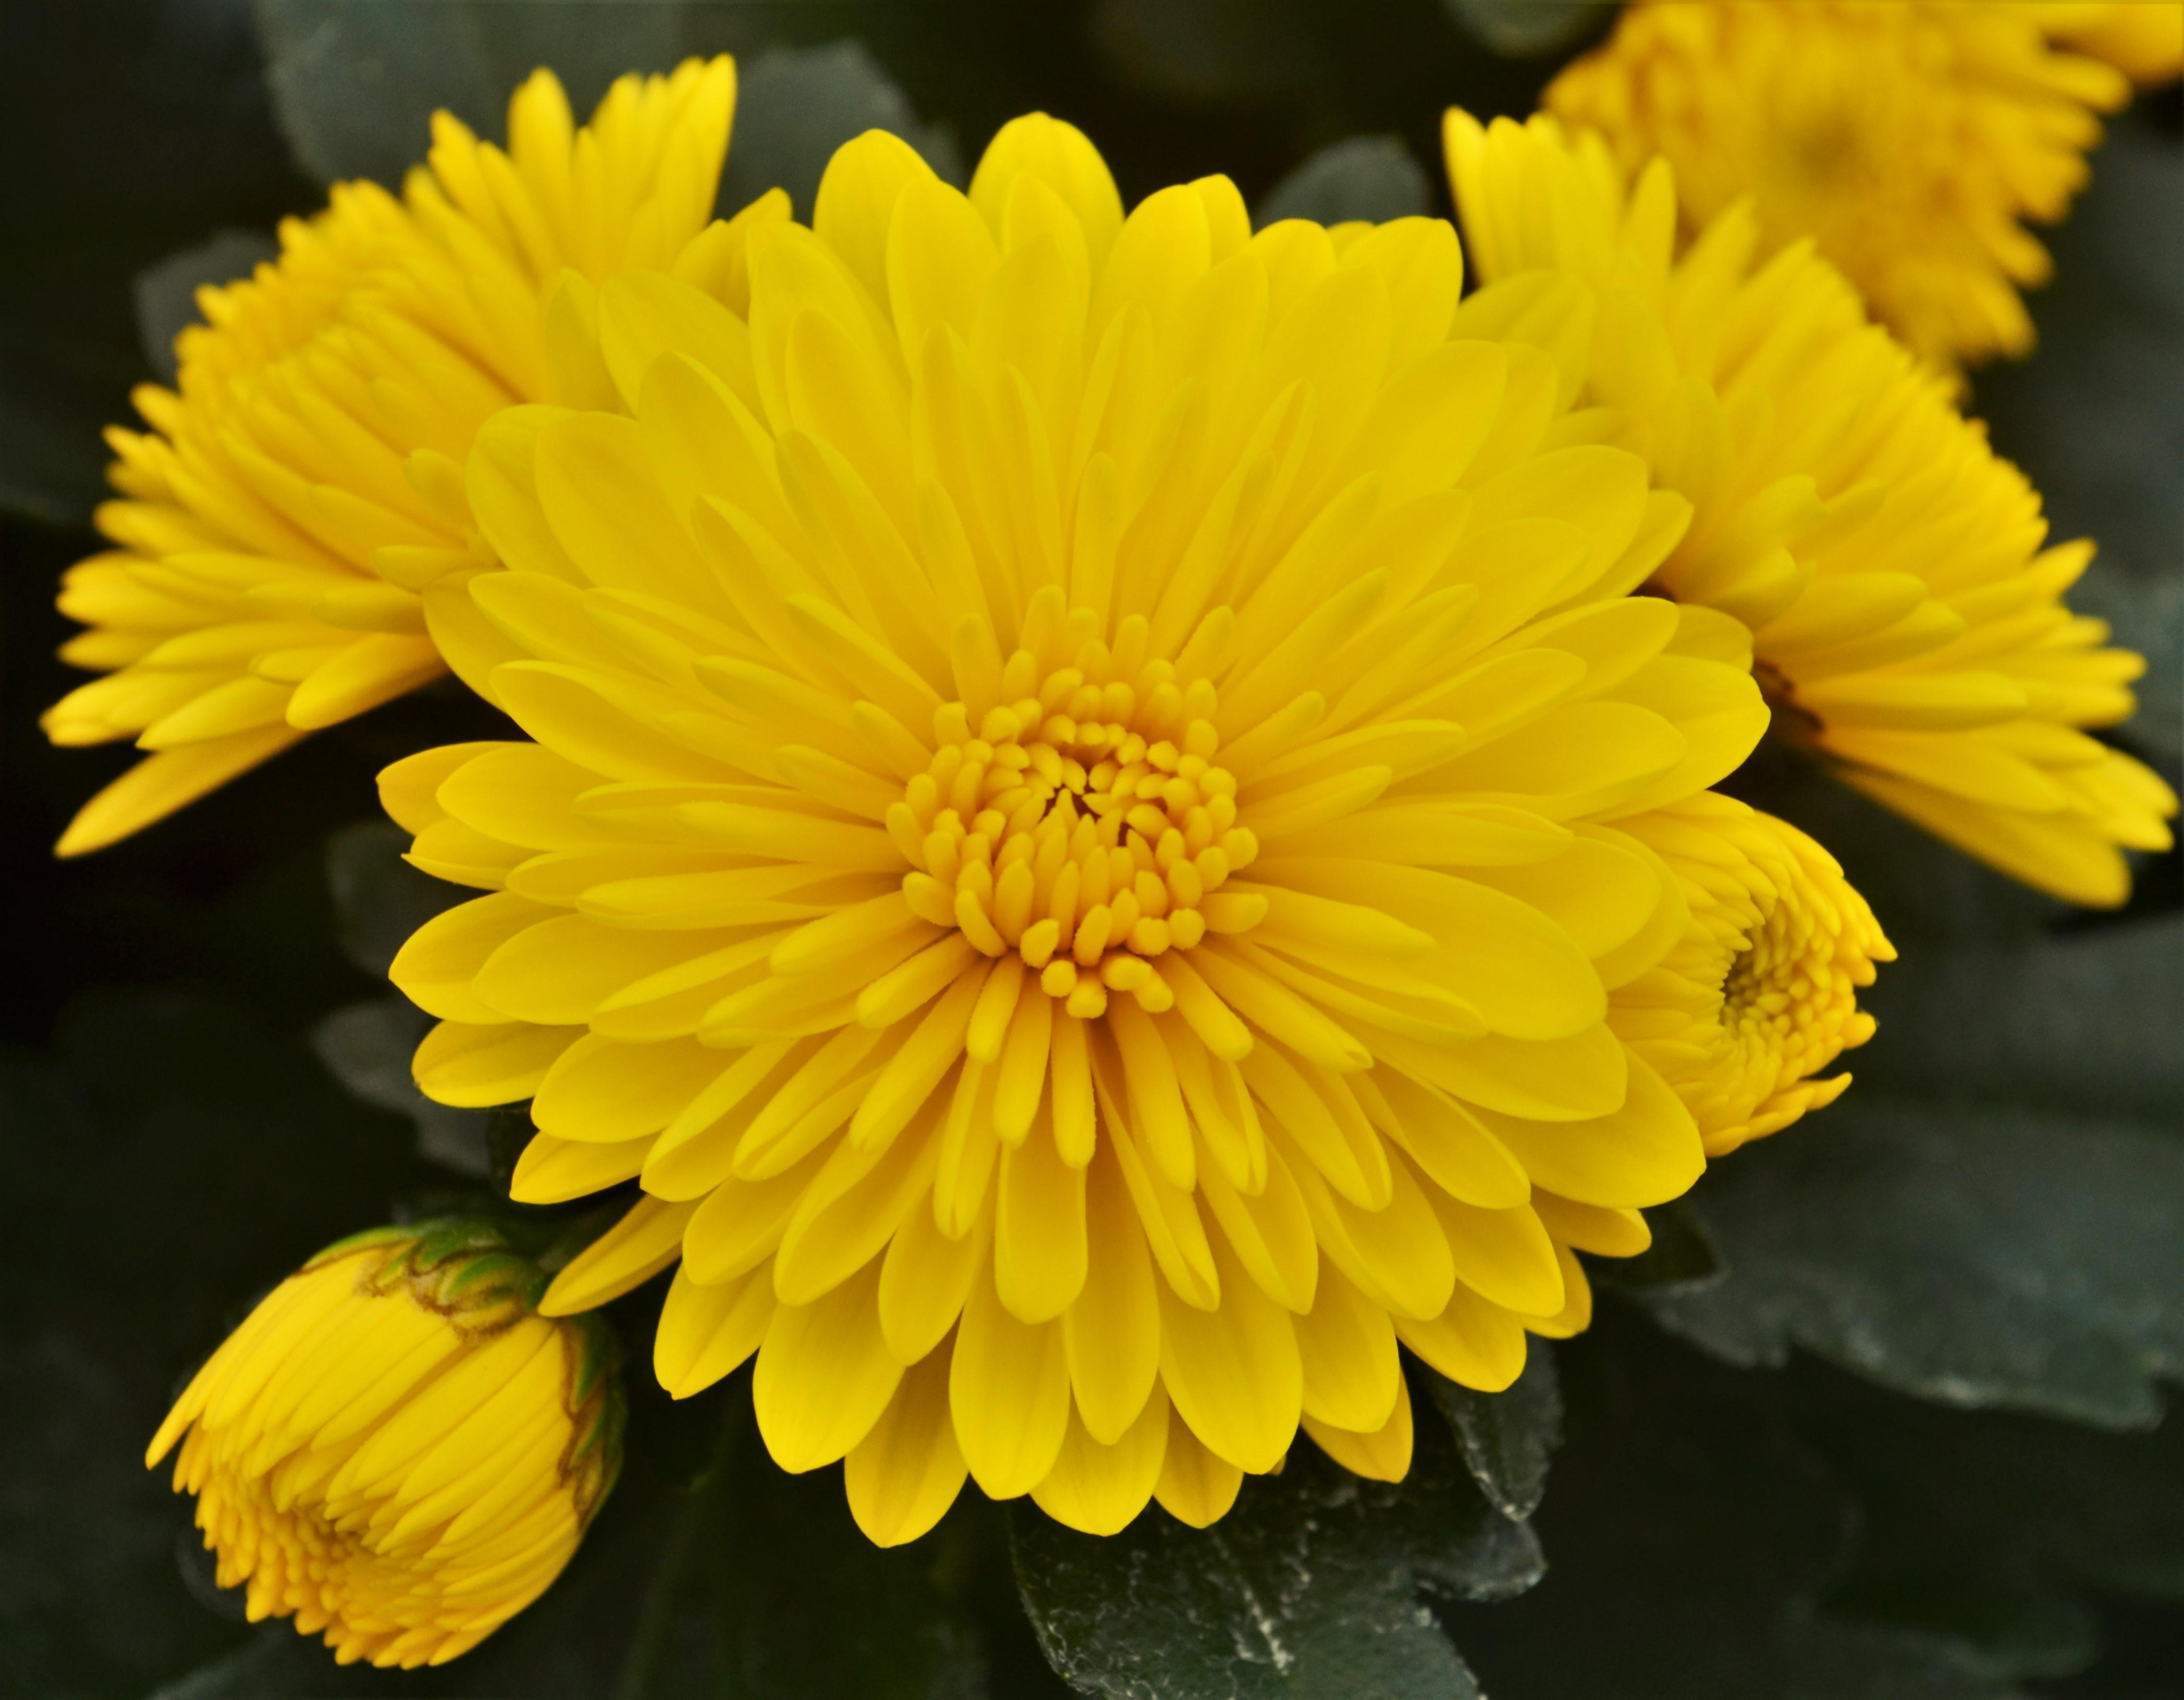 Chrysanthemum Cheryl 'Sparkling Yellow' - Mum from Hillcrest Nursery